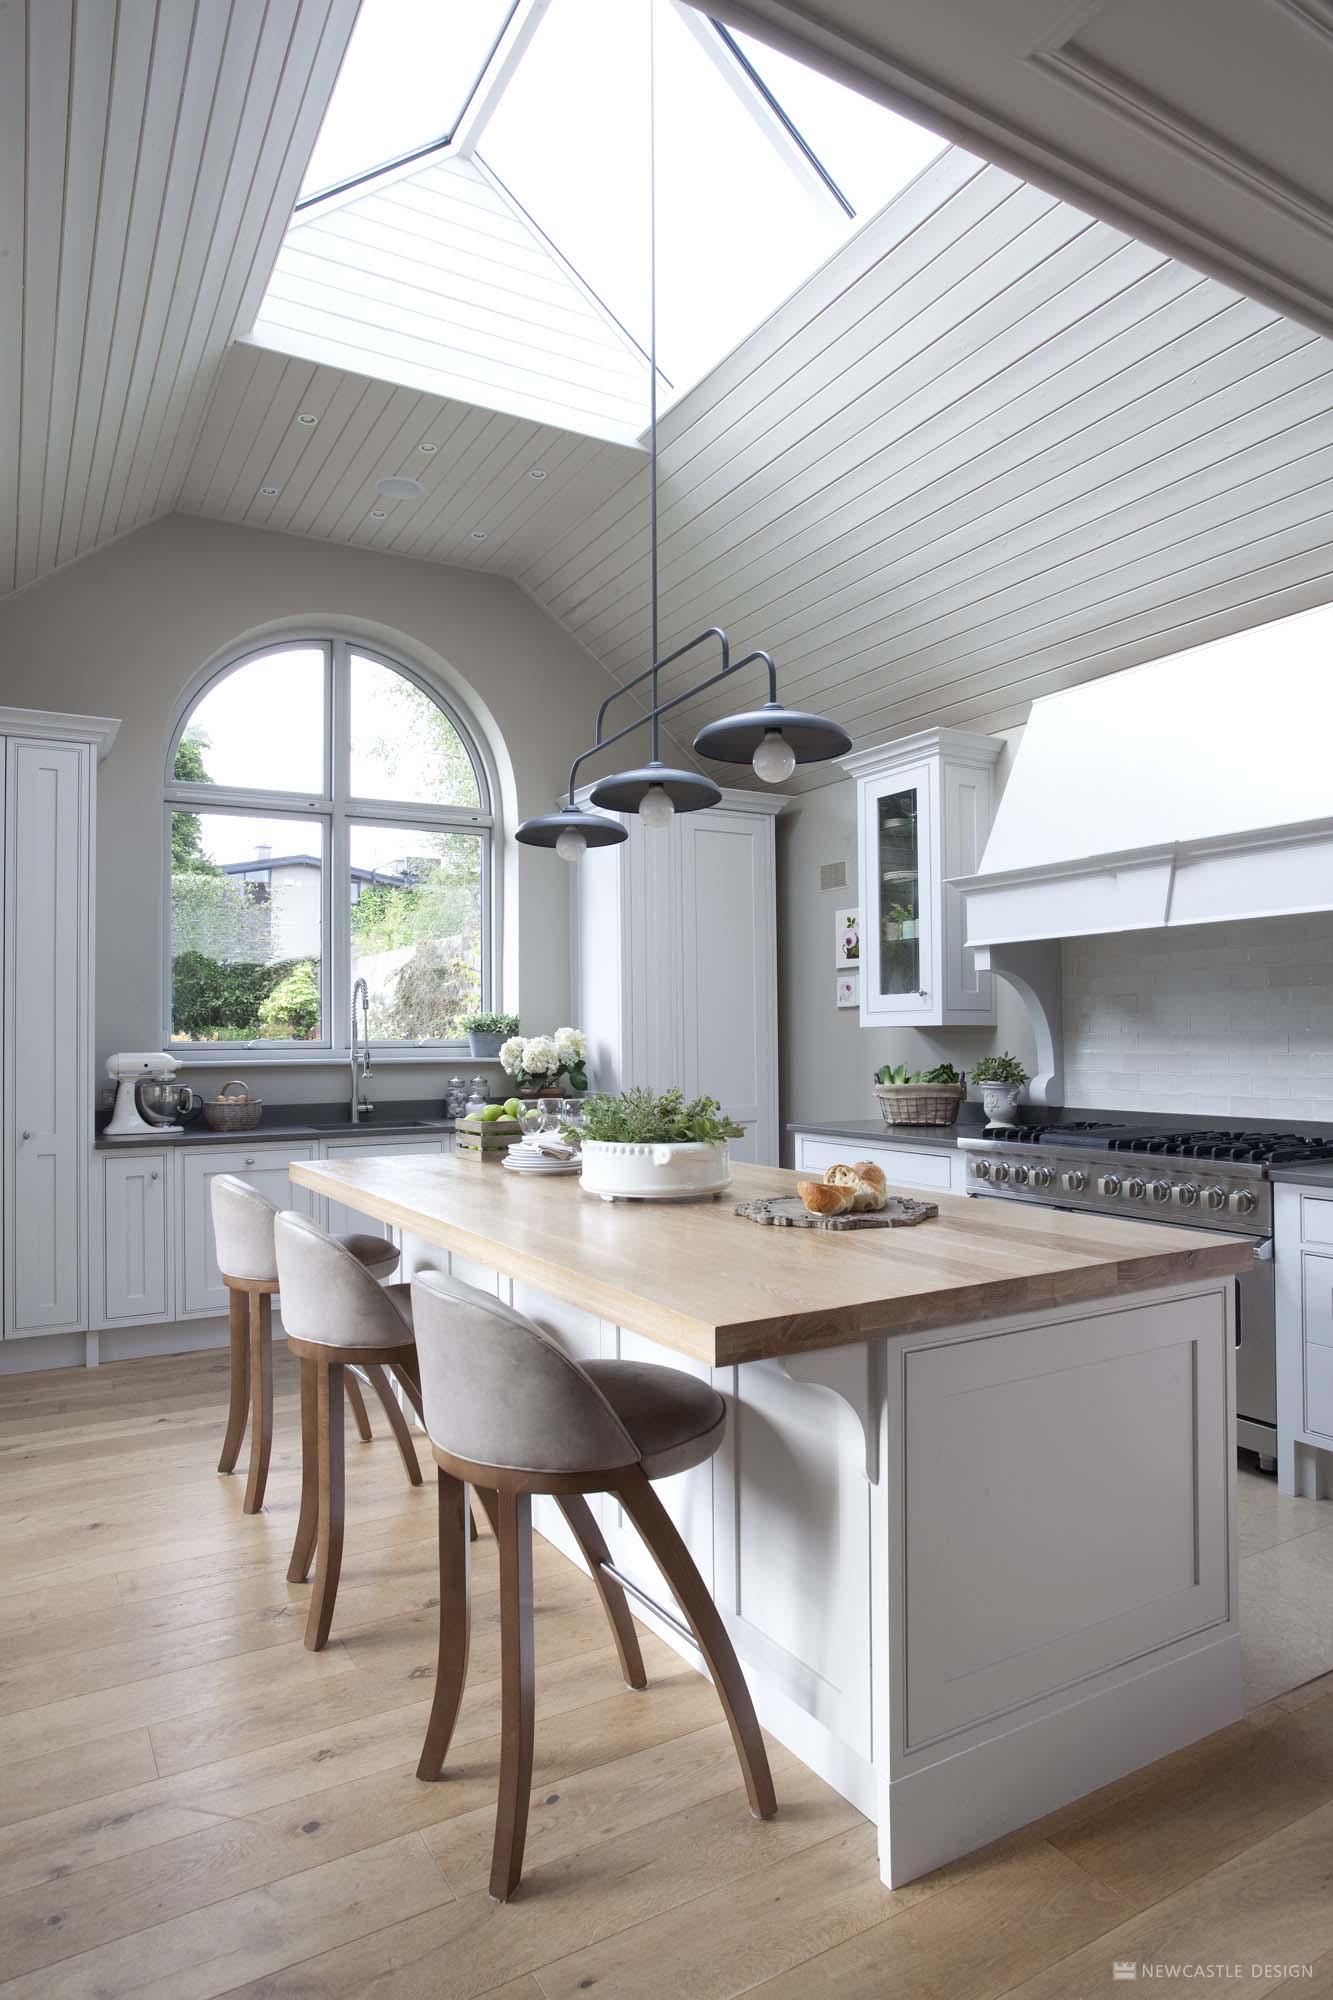 Farmhouse Kitchens in Ireland with Newcastle Design